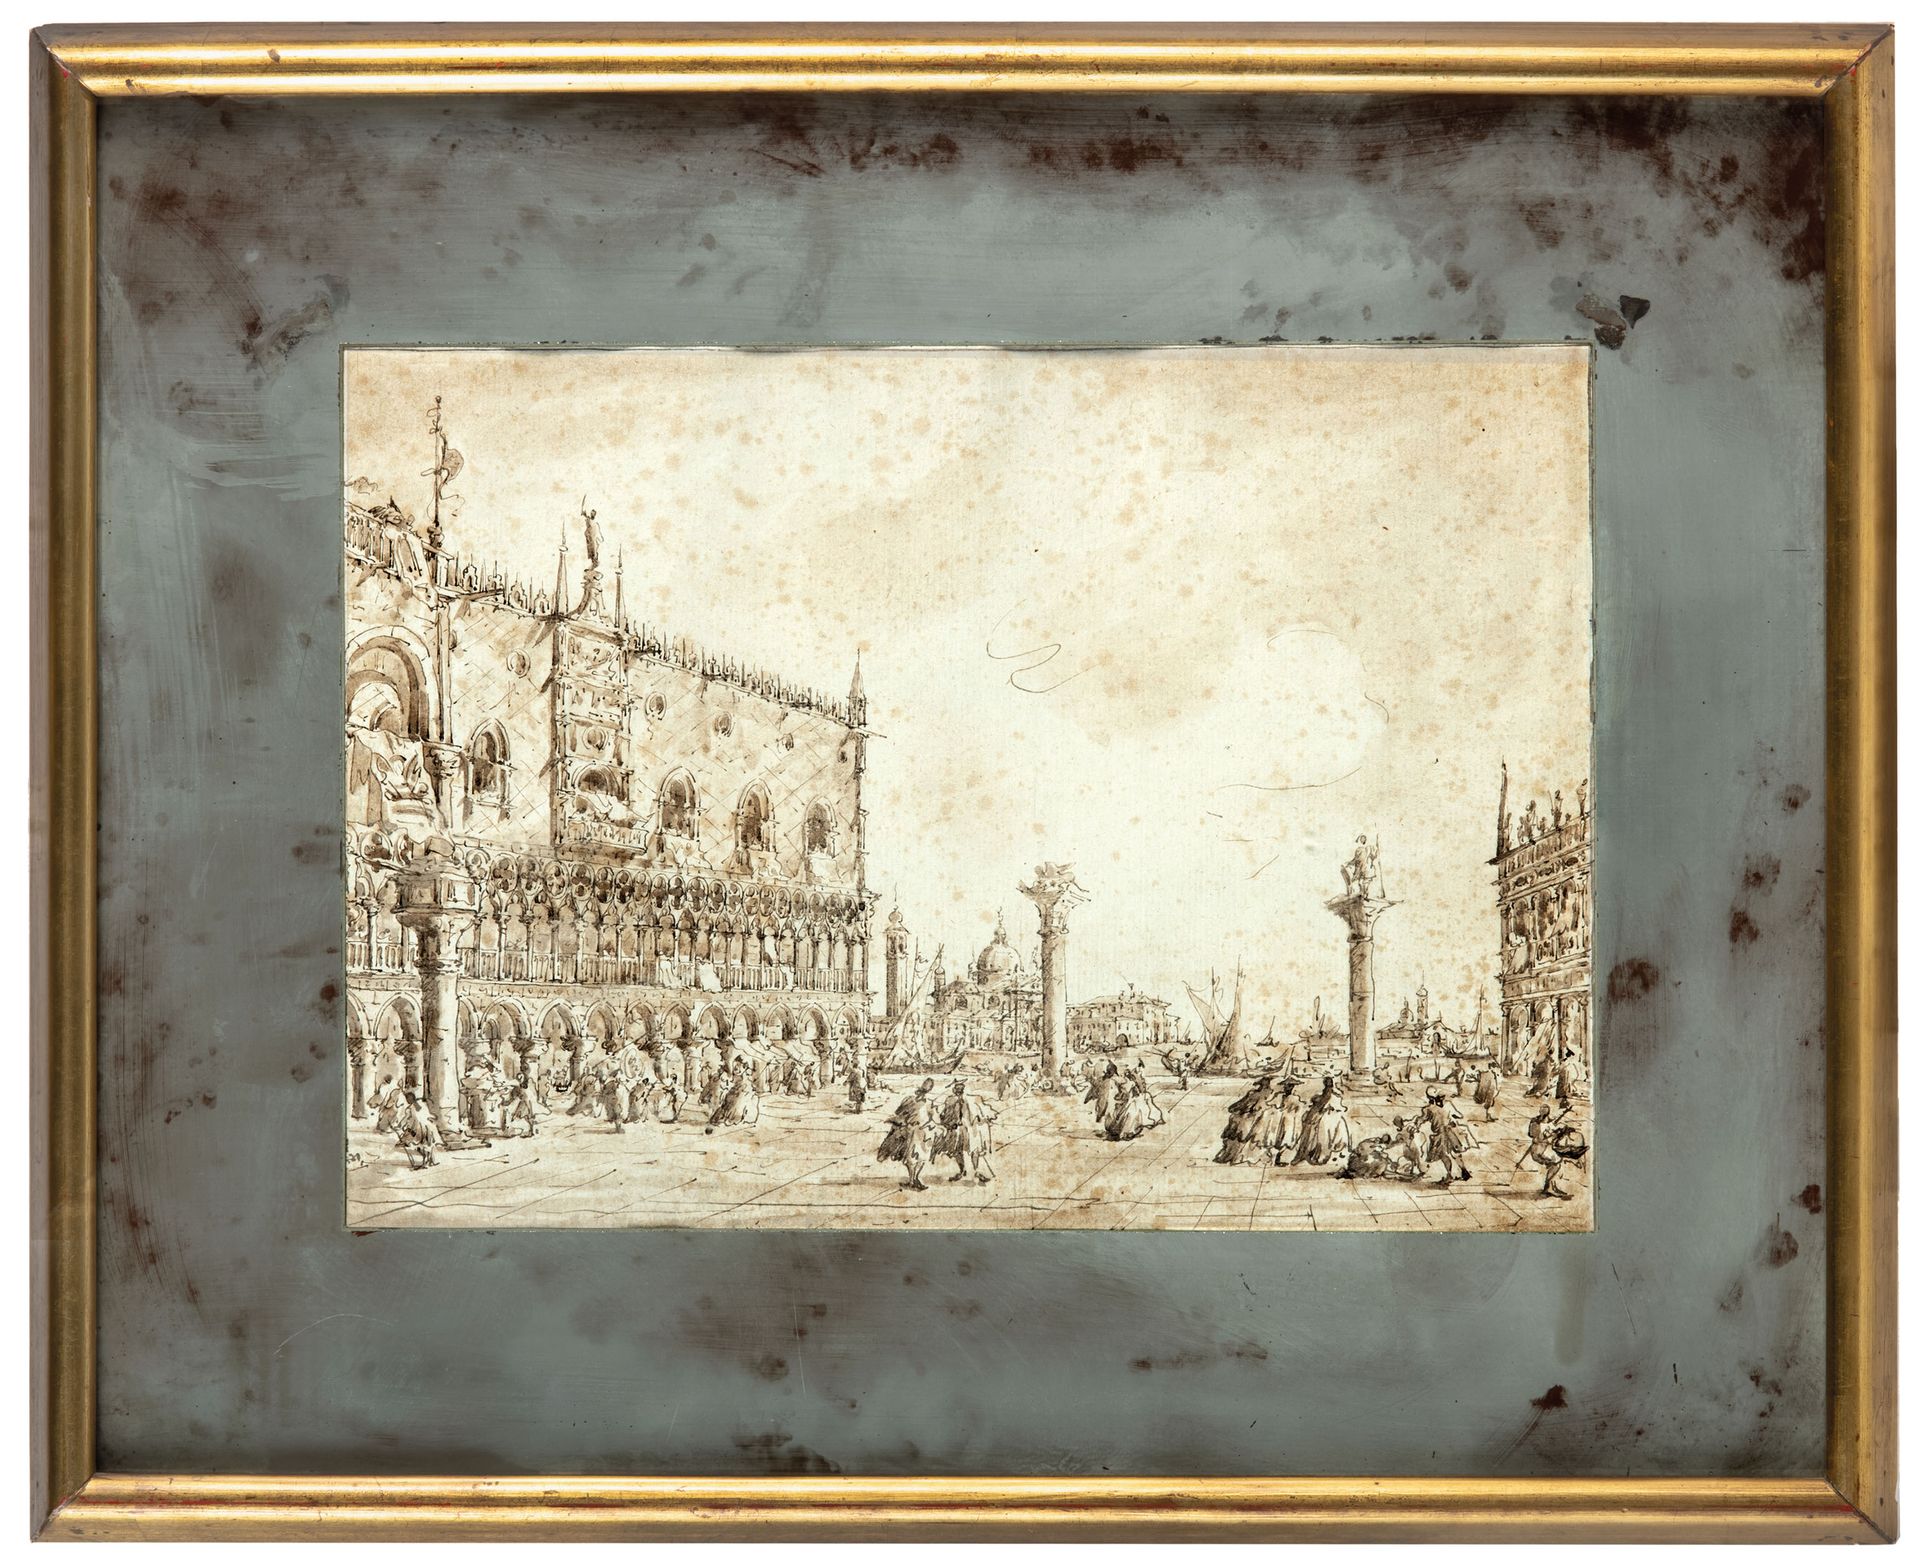 FRANCESCO GUARDI (maniera di) (威尼斯，1712年-1793年)
里亚托的景色
中国纸本，28.7X41厘米
圣乔治岛的景色
总督&hellip;